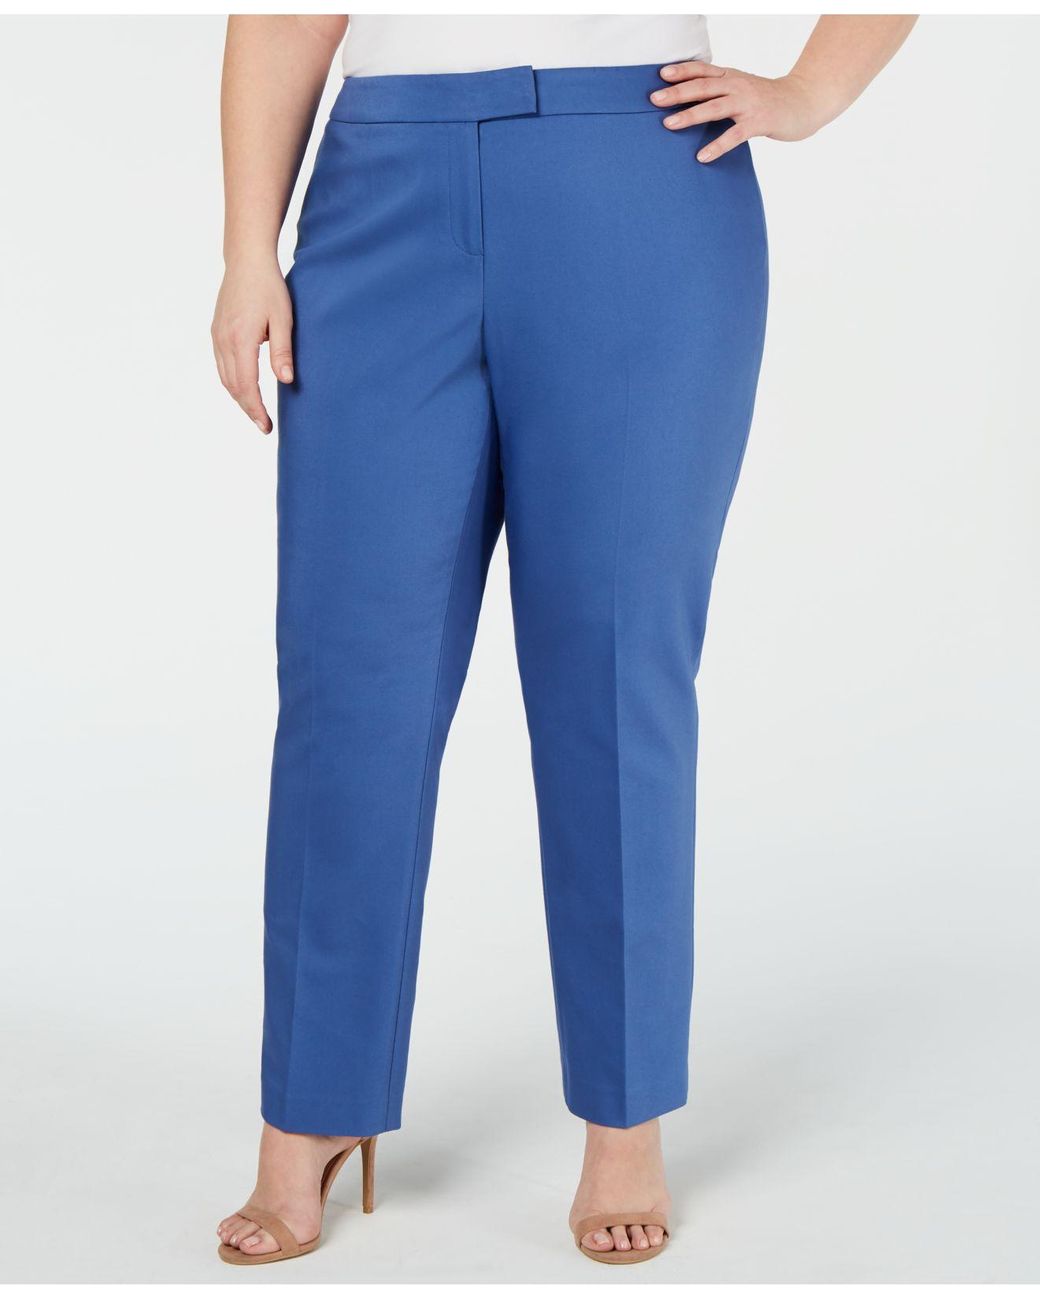 Lyst - Anne Klein Plus Size Straight-leg Pants in Blue